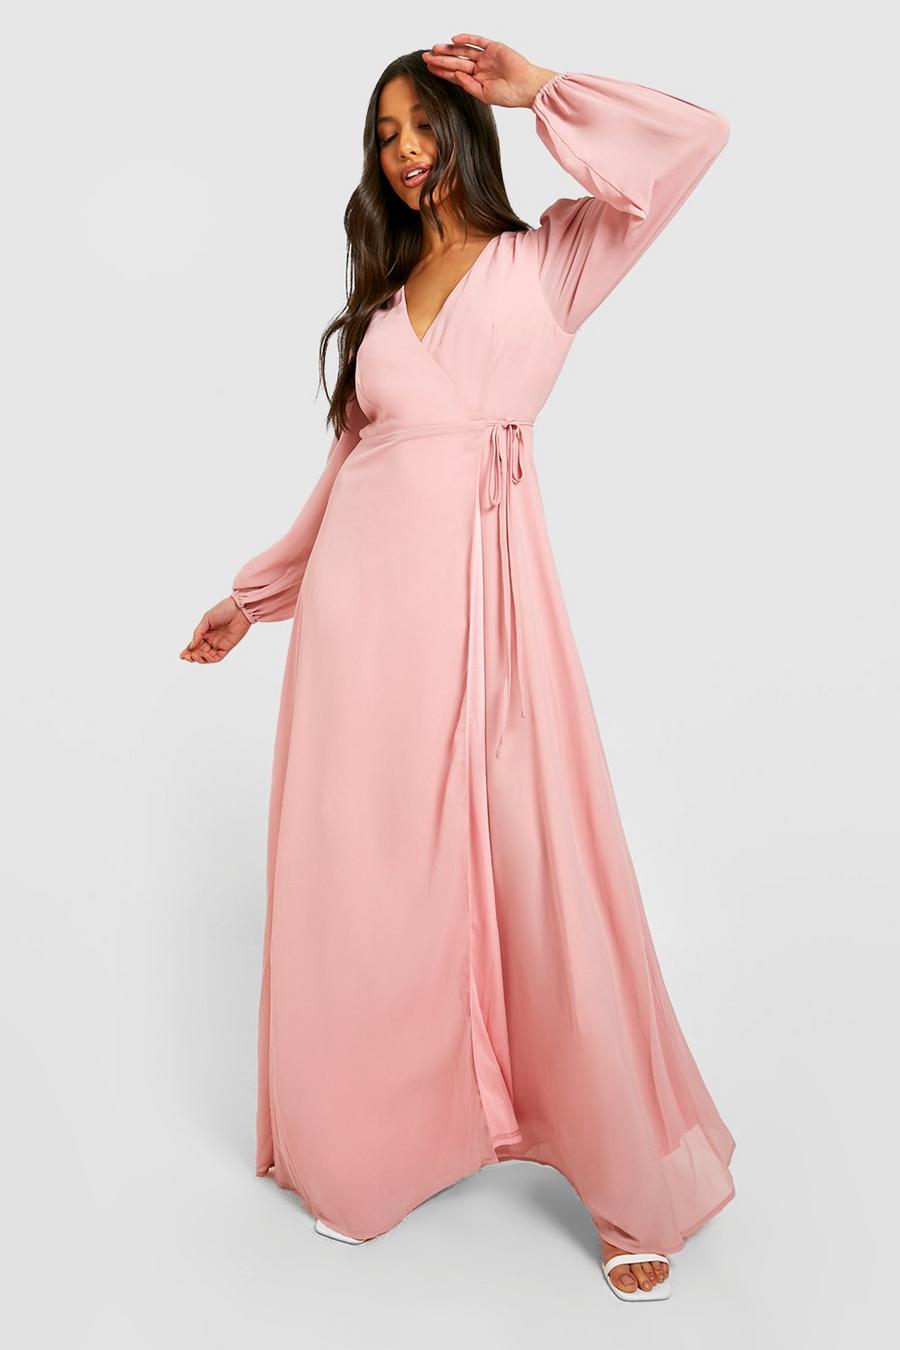 Blush pink Chiffon Bridesmaid Long Sleeve Wrap Dress